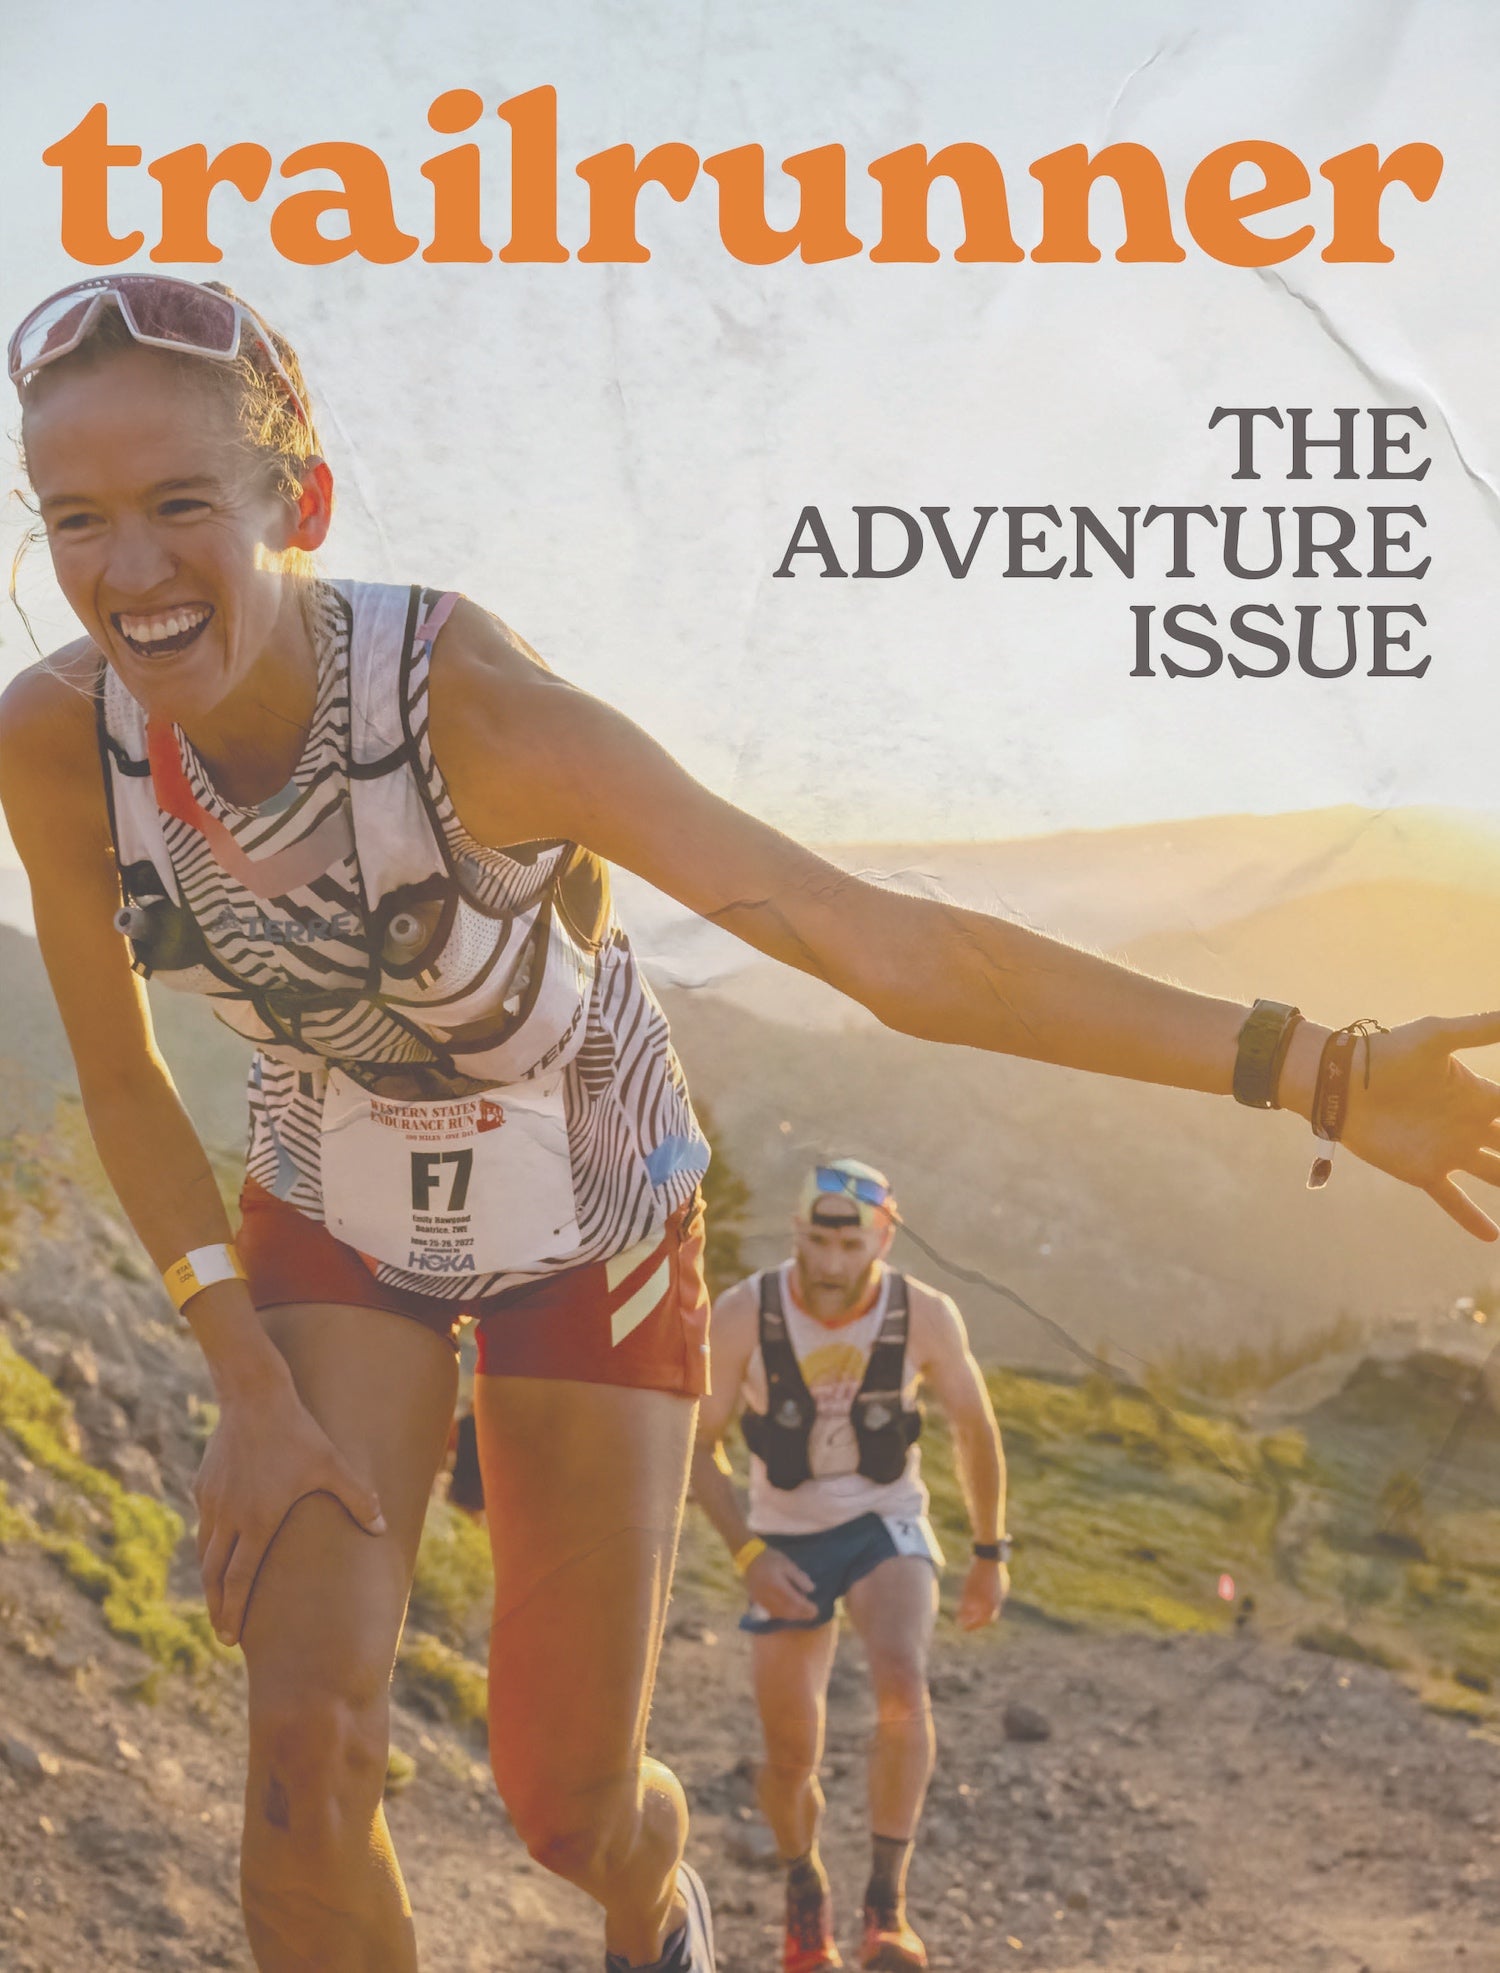 2021 Gear Guide - Trail Runner Magazine